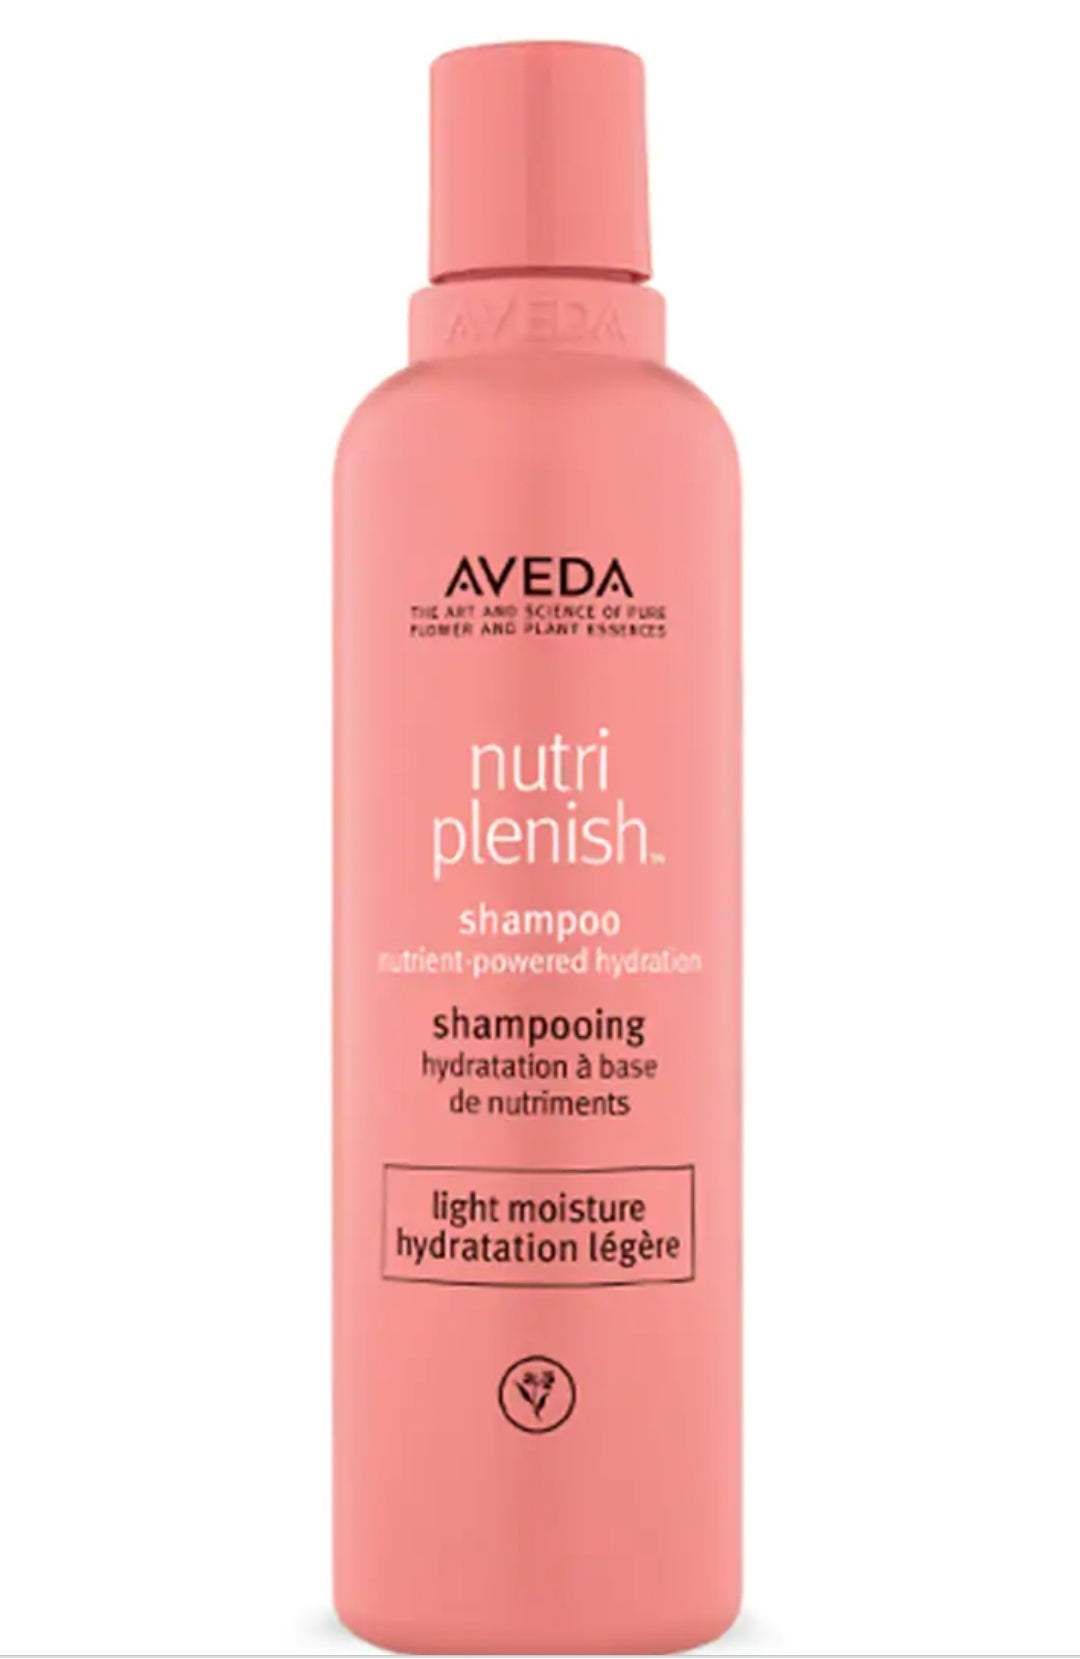 Aveda nutri plenish shampoo light